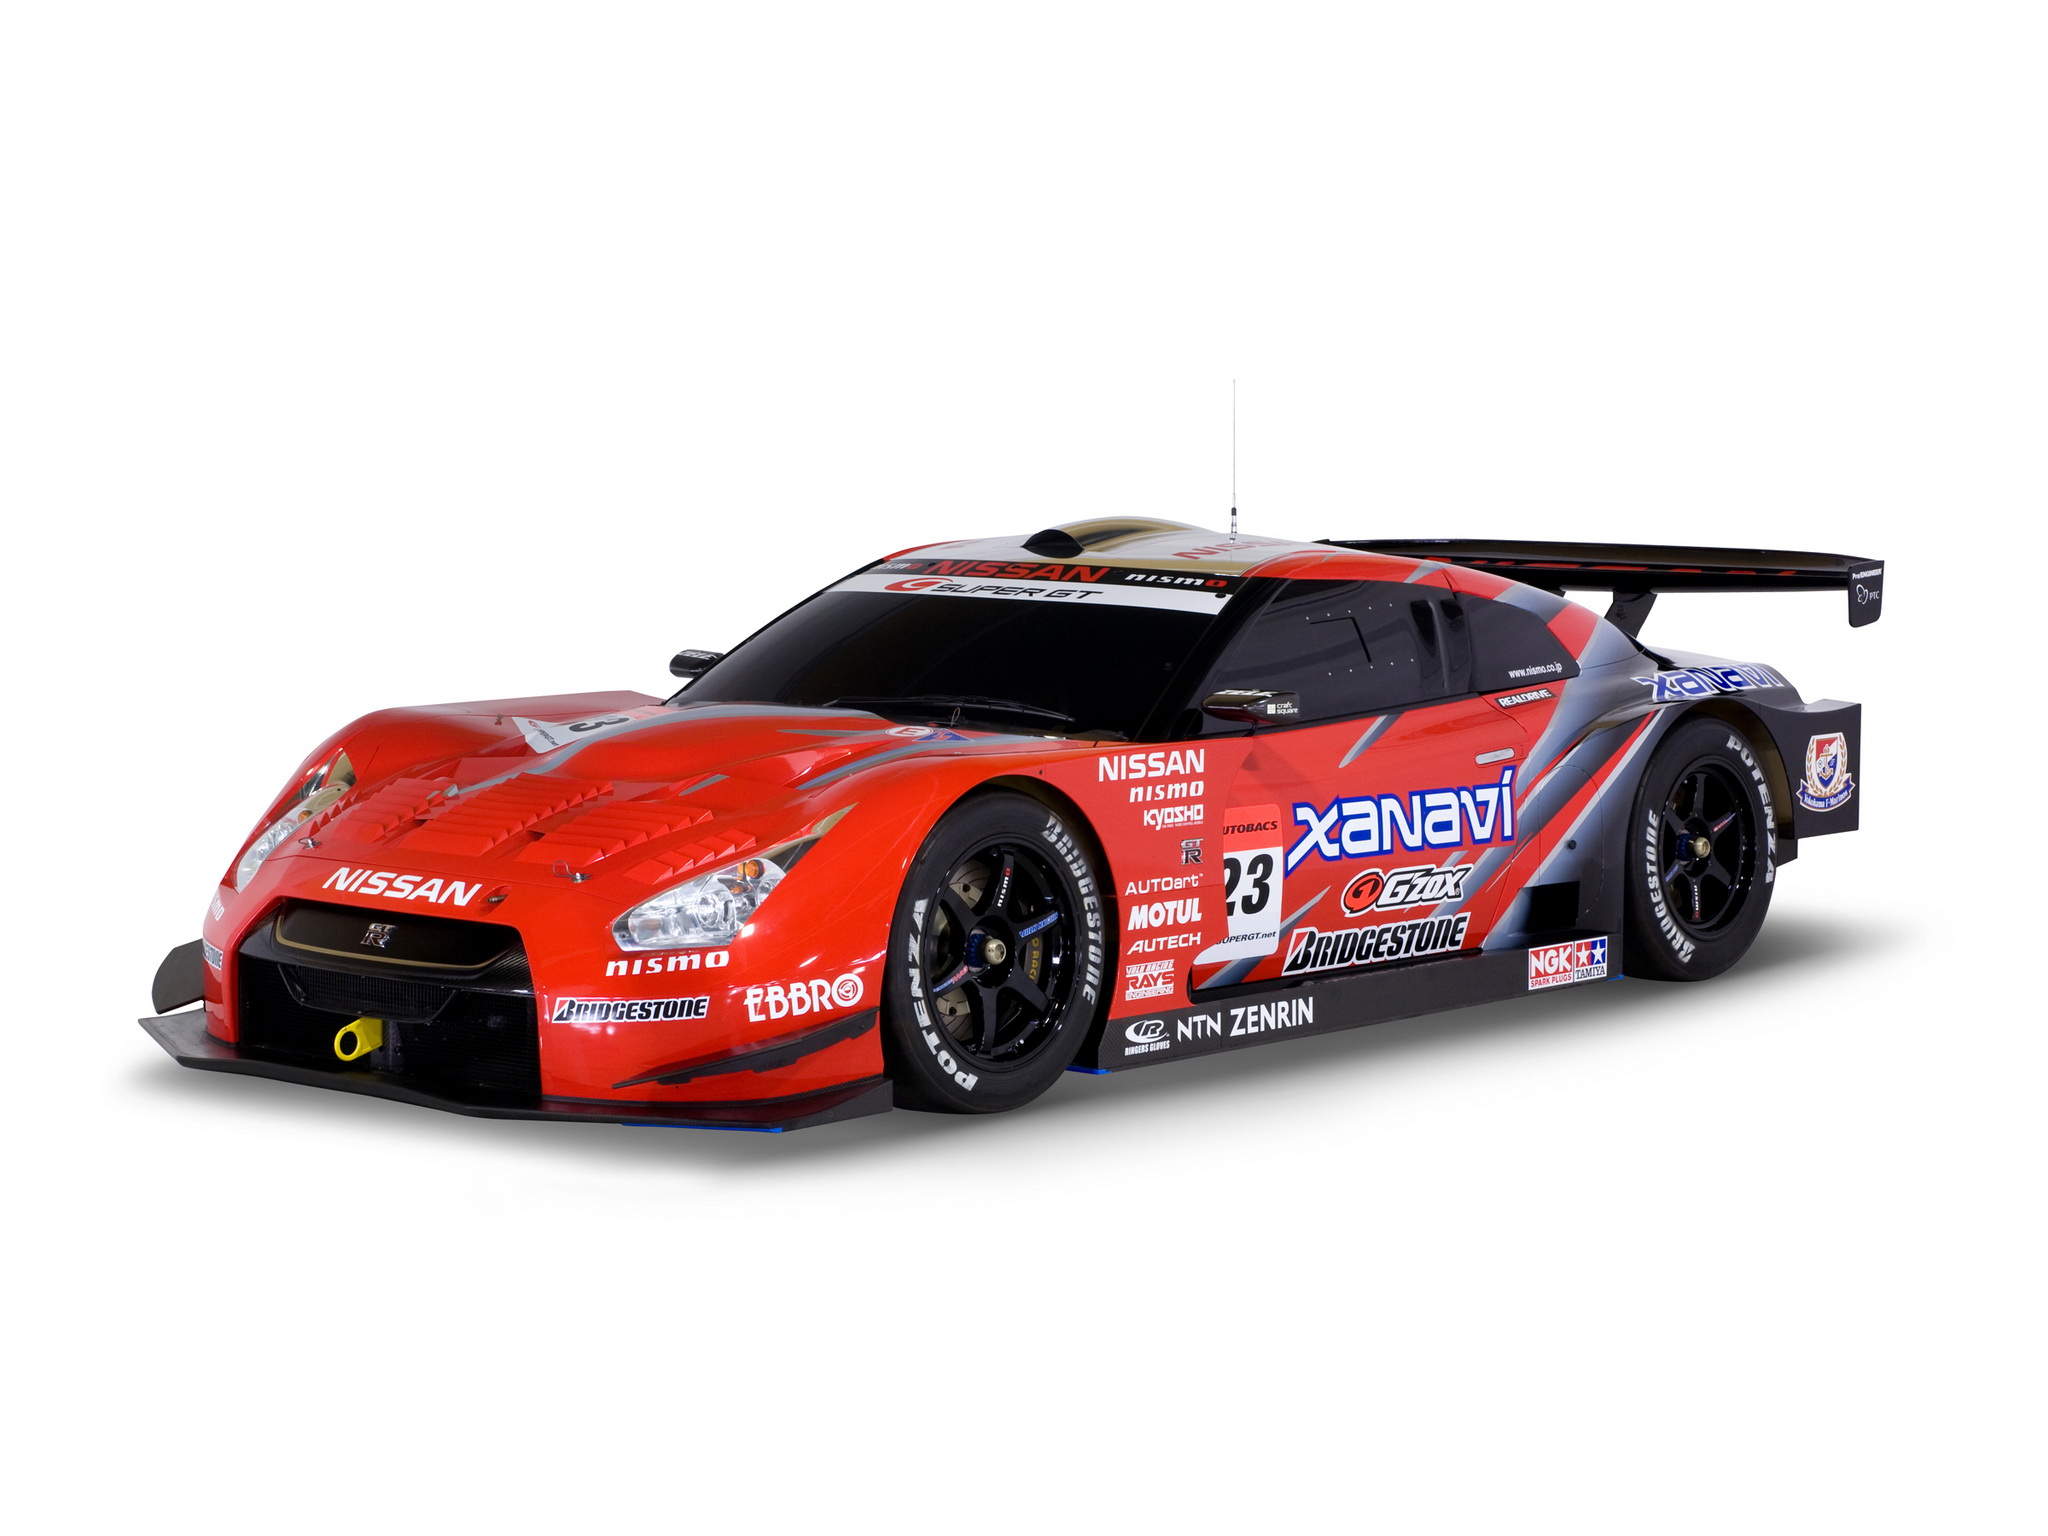 2008, Nissan, Gt r, Gt500, R35, Race, Racing Wallpaper